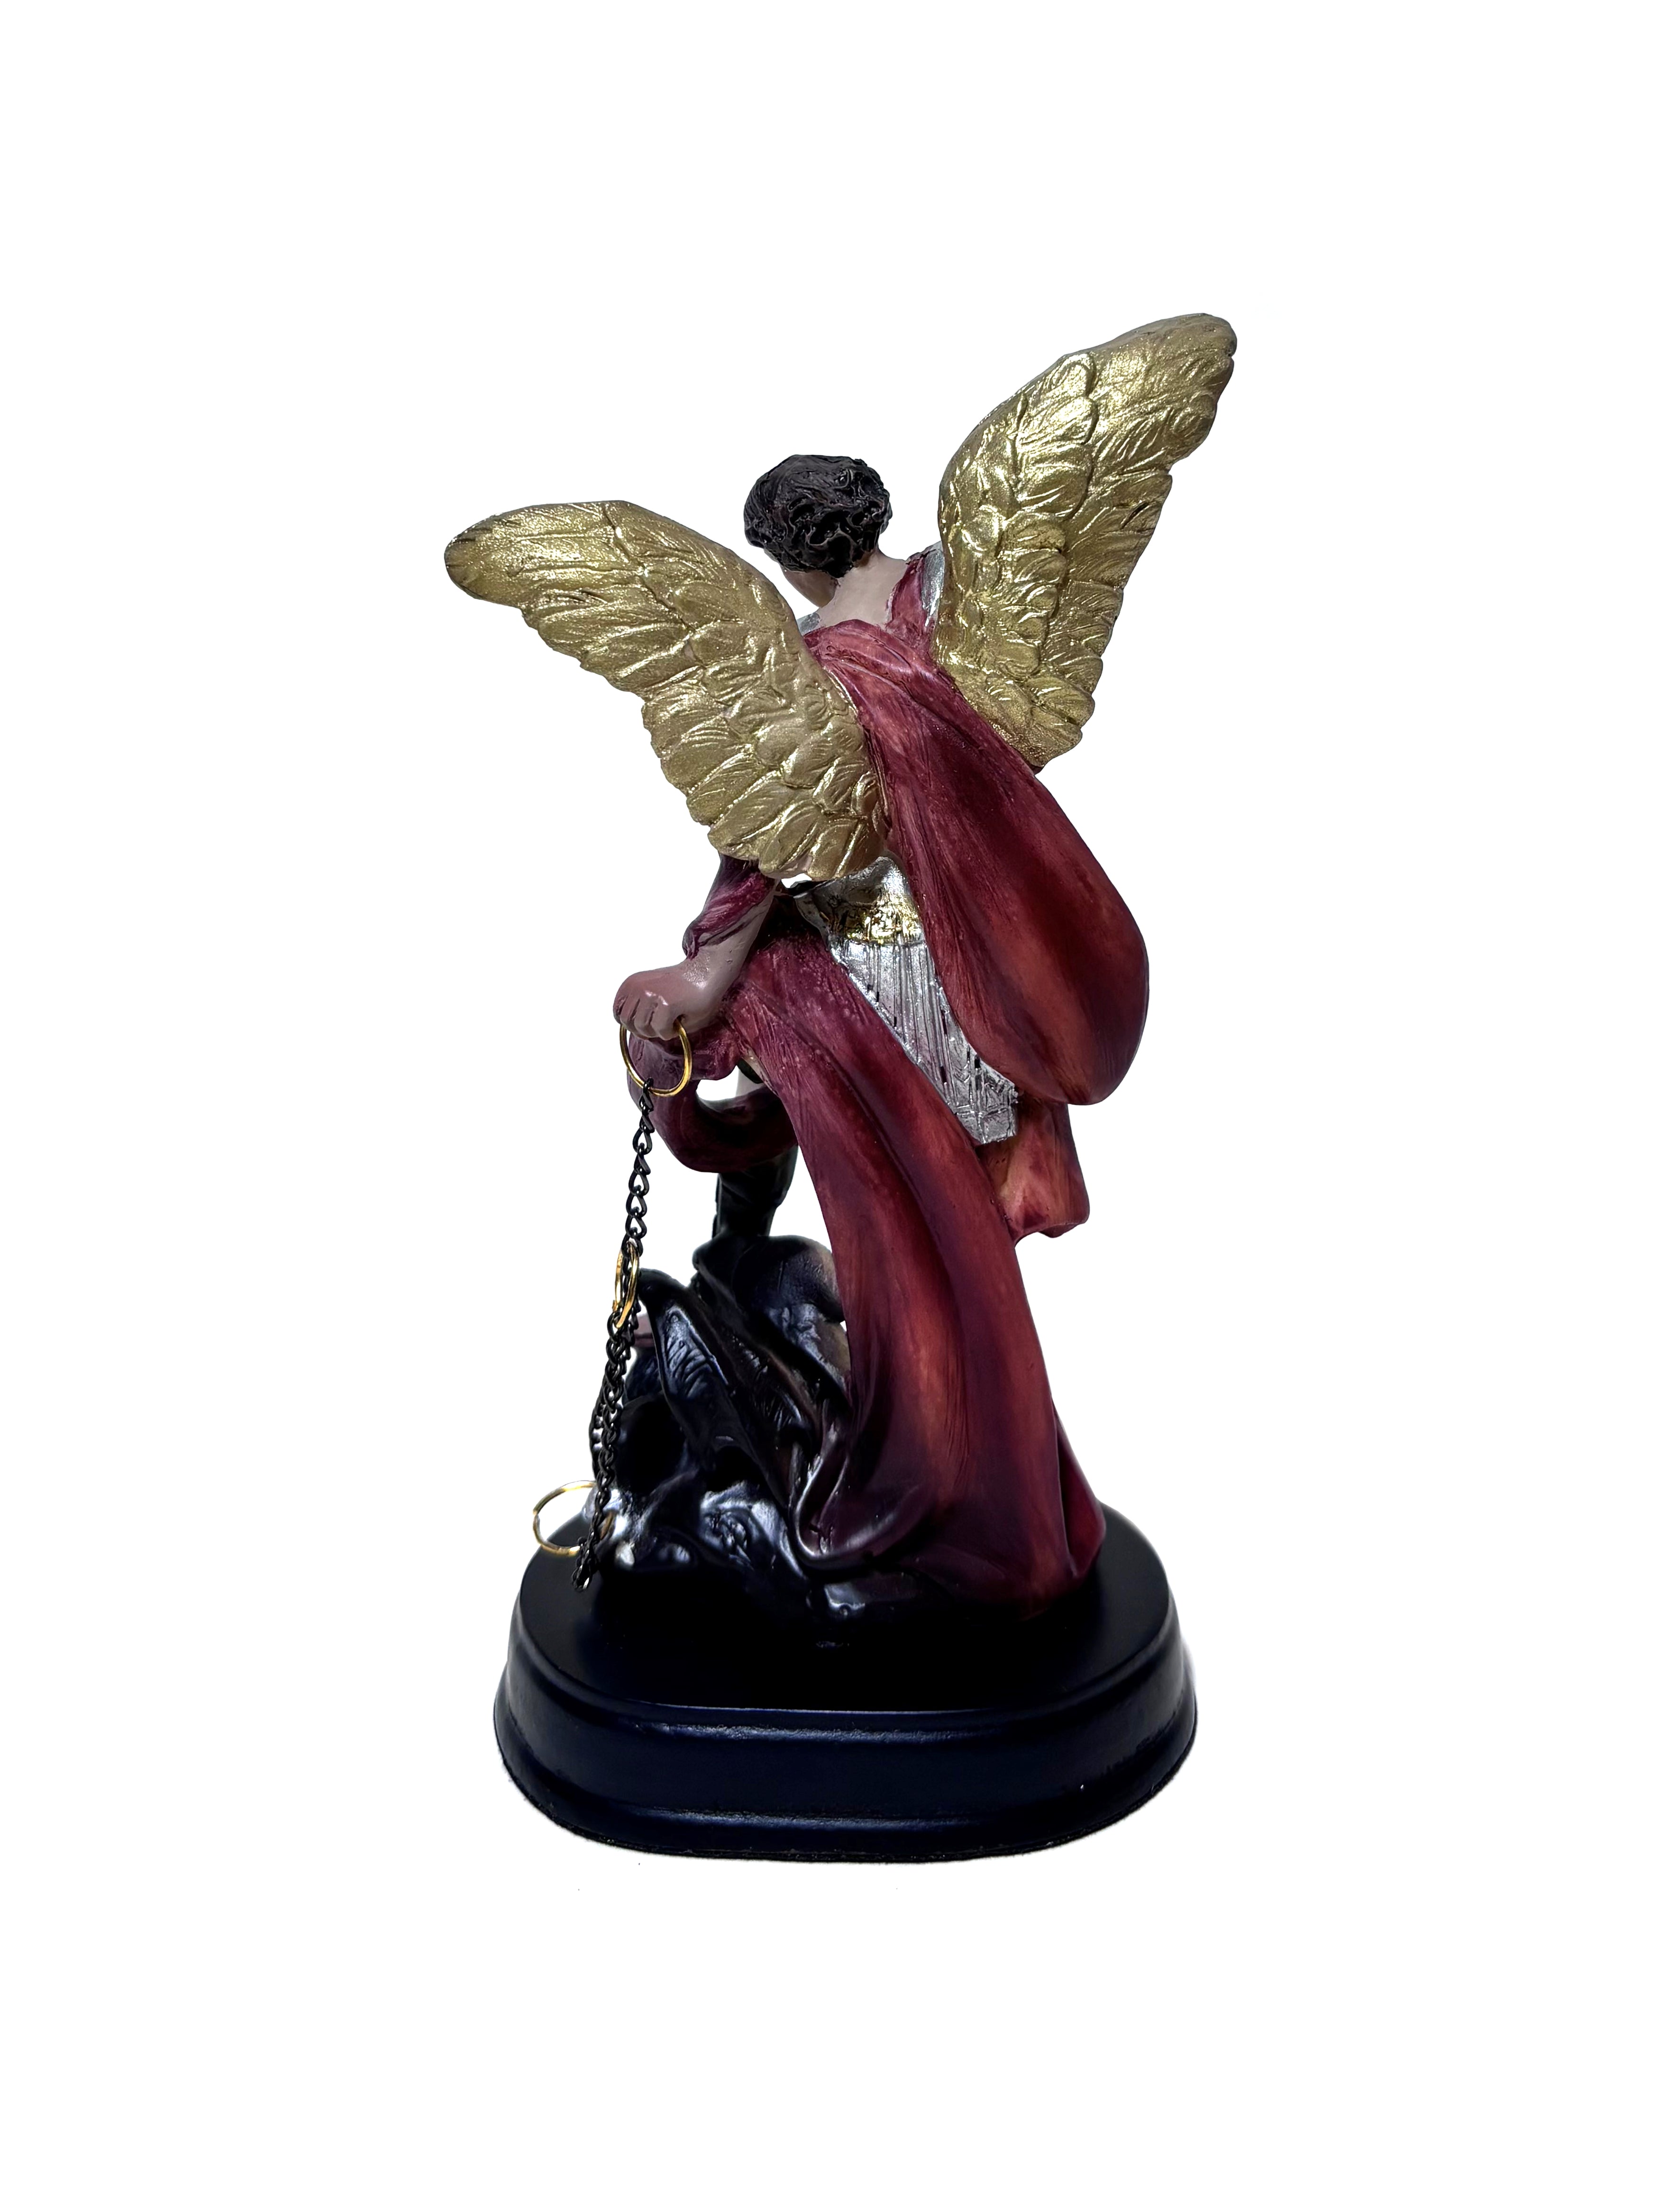 Religious statue of Saint Michael Archangel 5" height